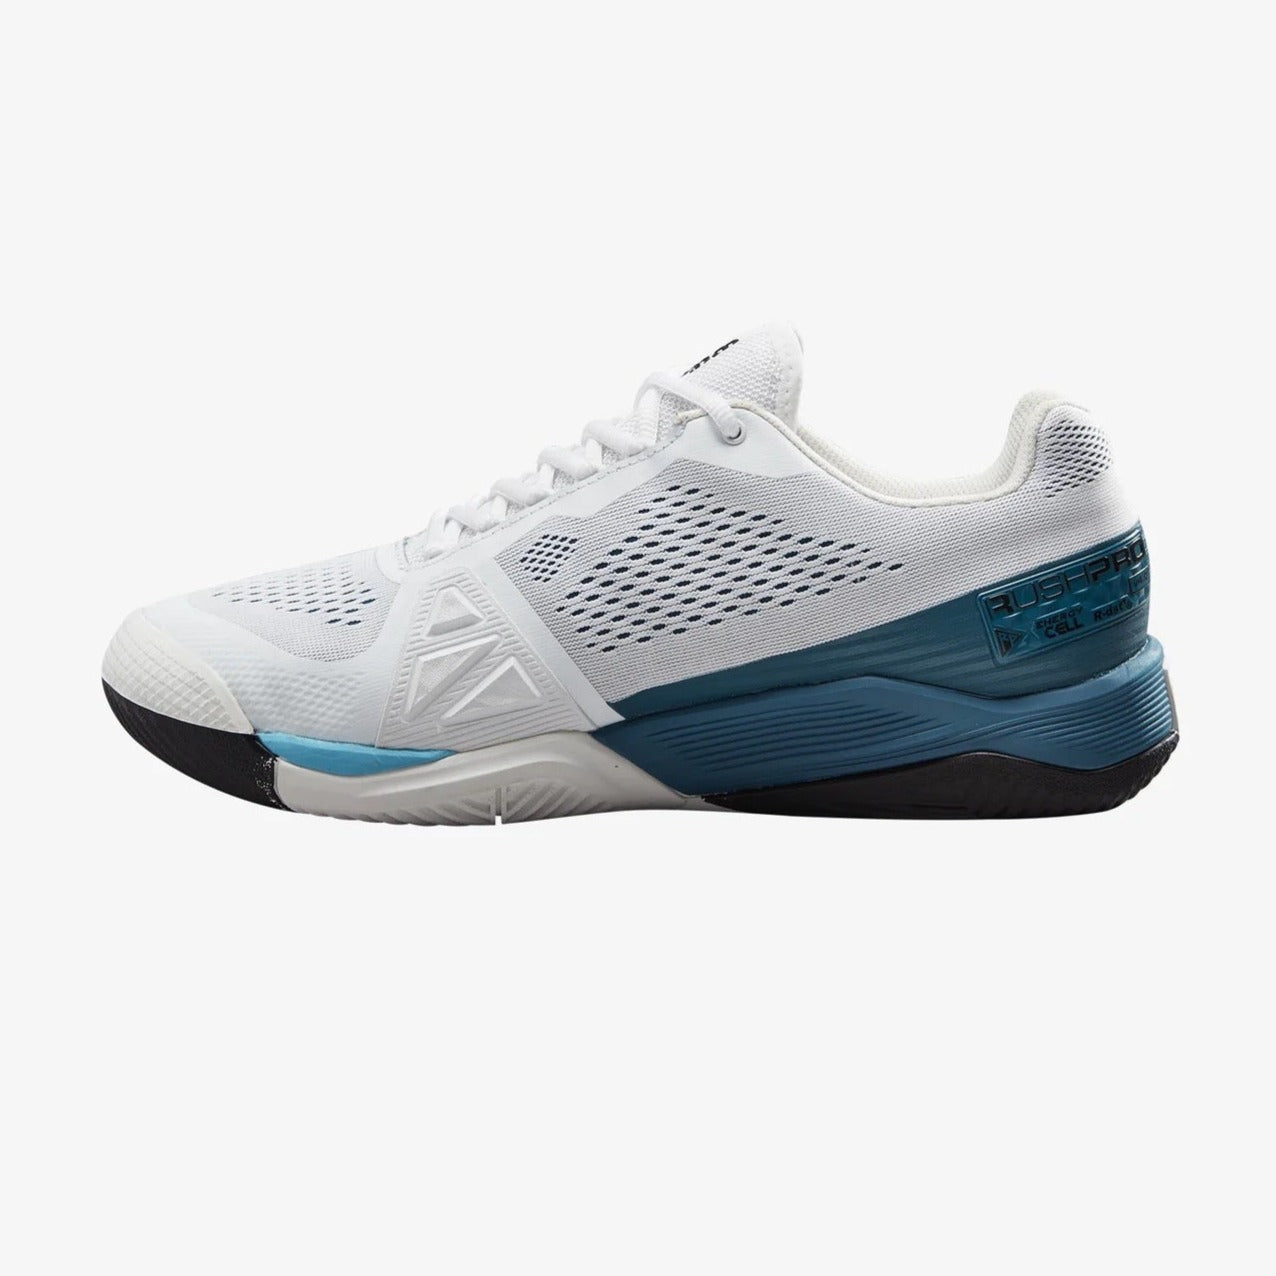 Wilson Rush Pro 4.0 White/Blue Coral/Blue Atoll Men's Shoe